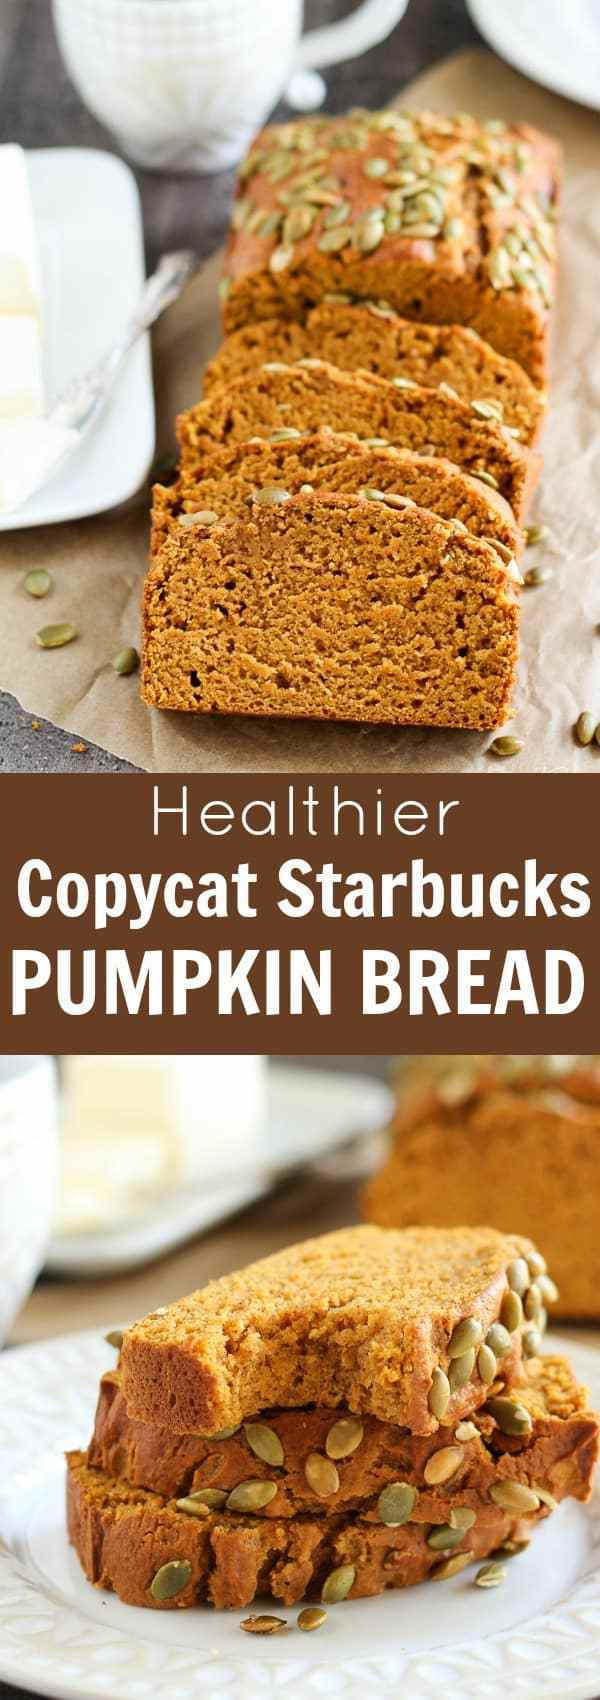 Starbucks Pumpkin Bread Recipe
 Healthier Copycat Starbucks Pumpkin Bread